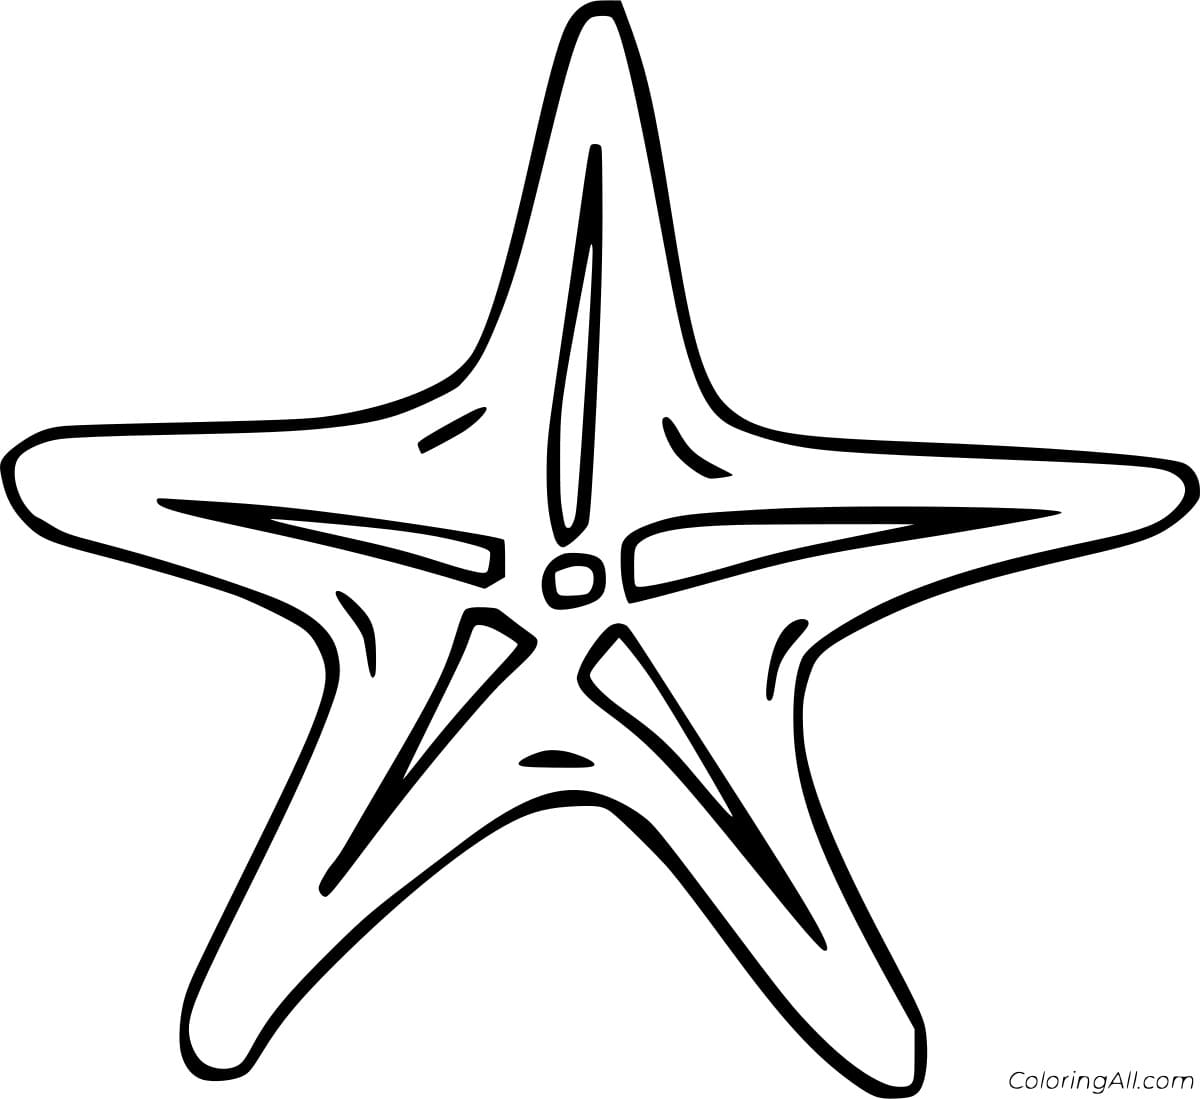 Easy Sea Star Image